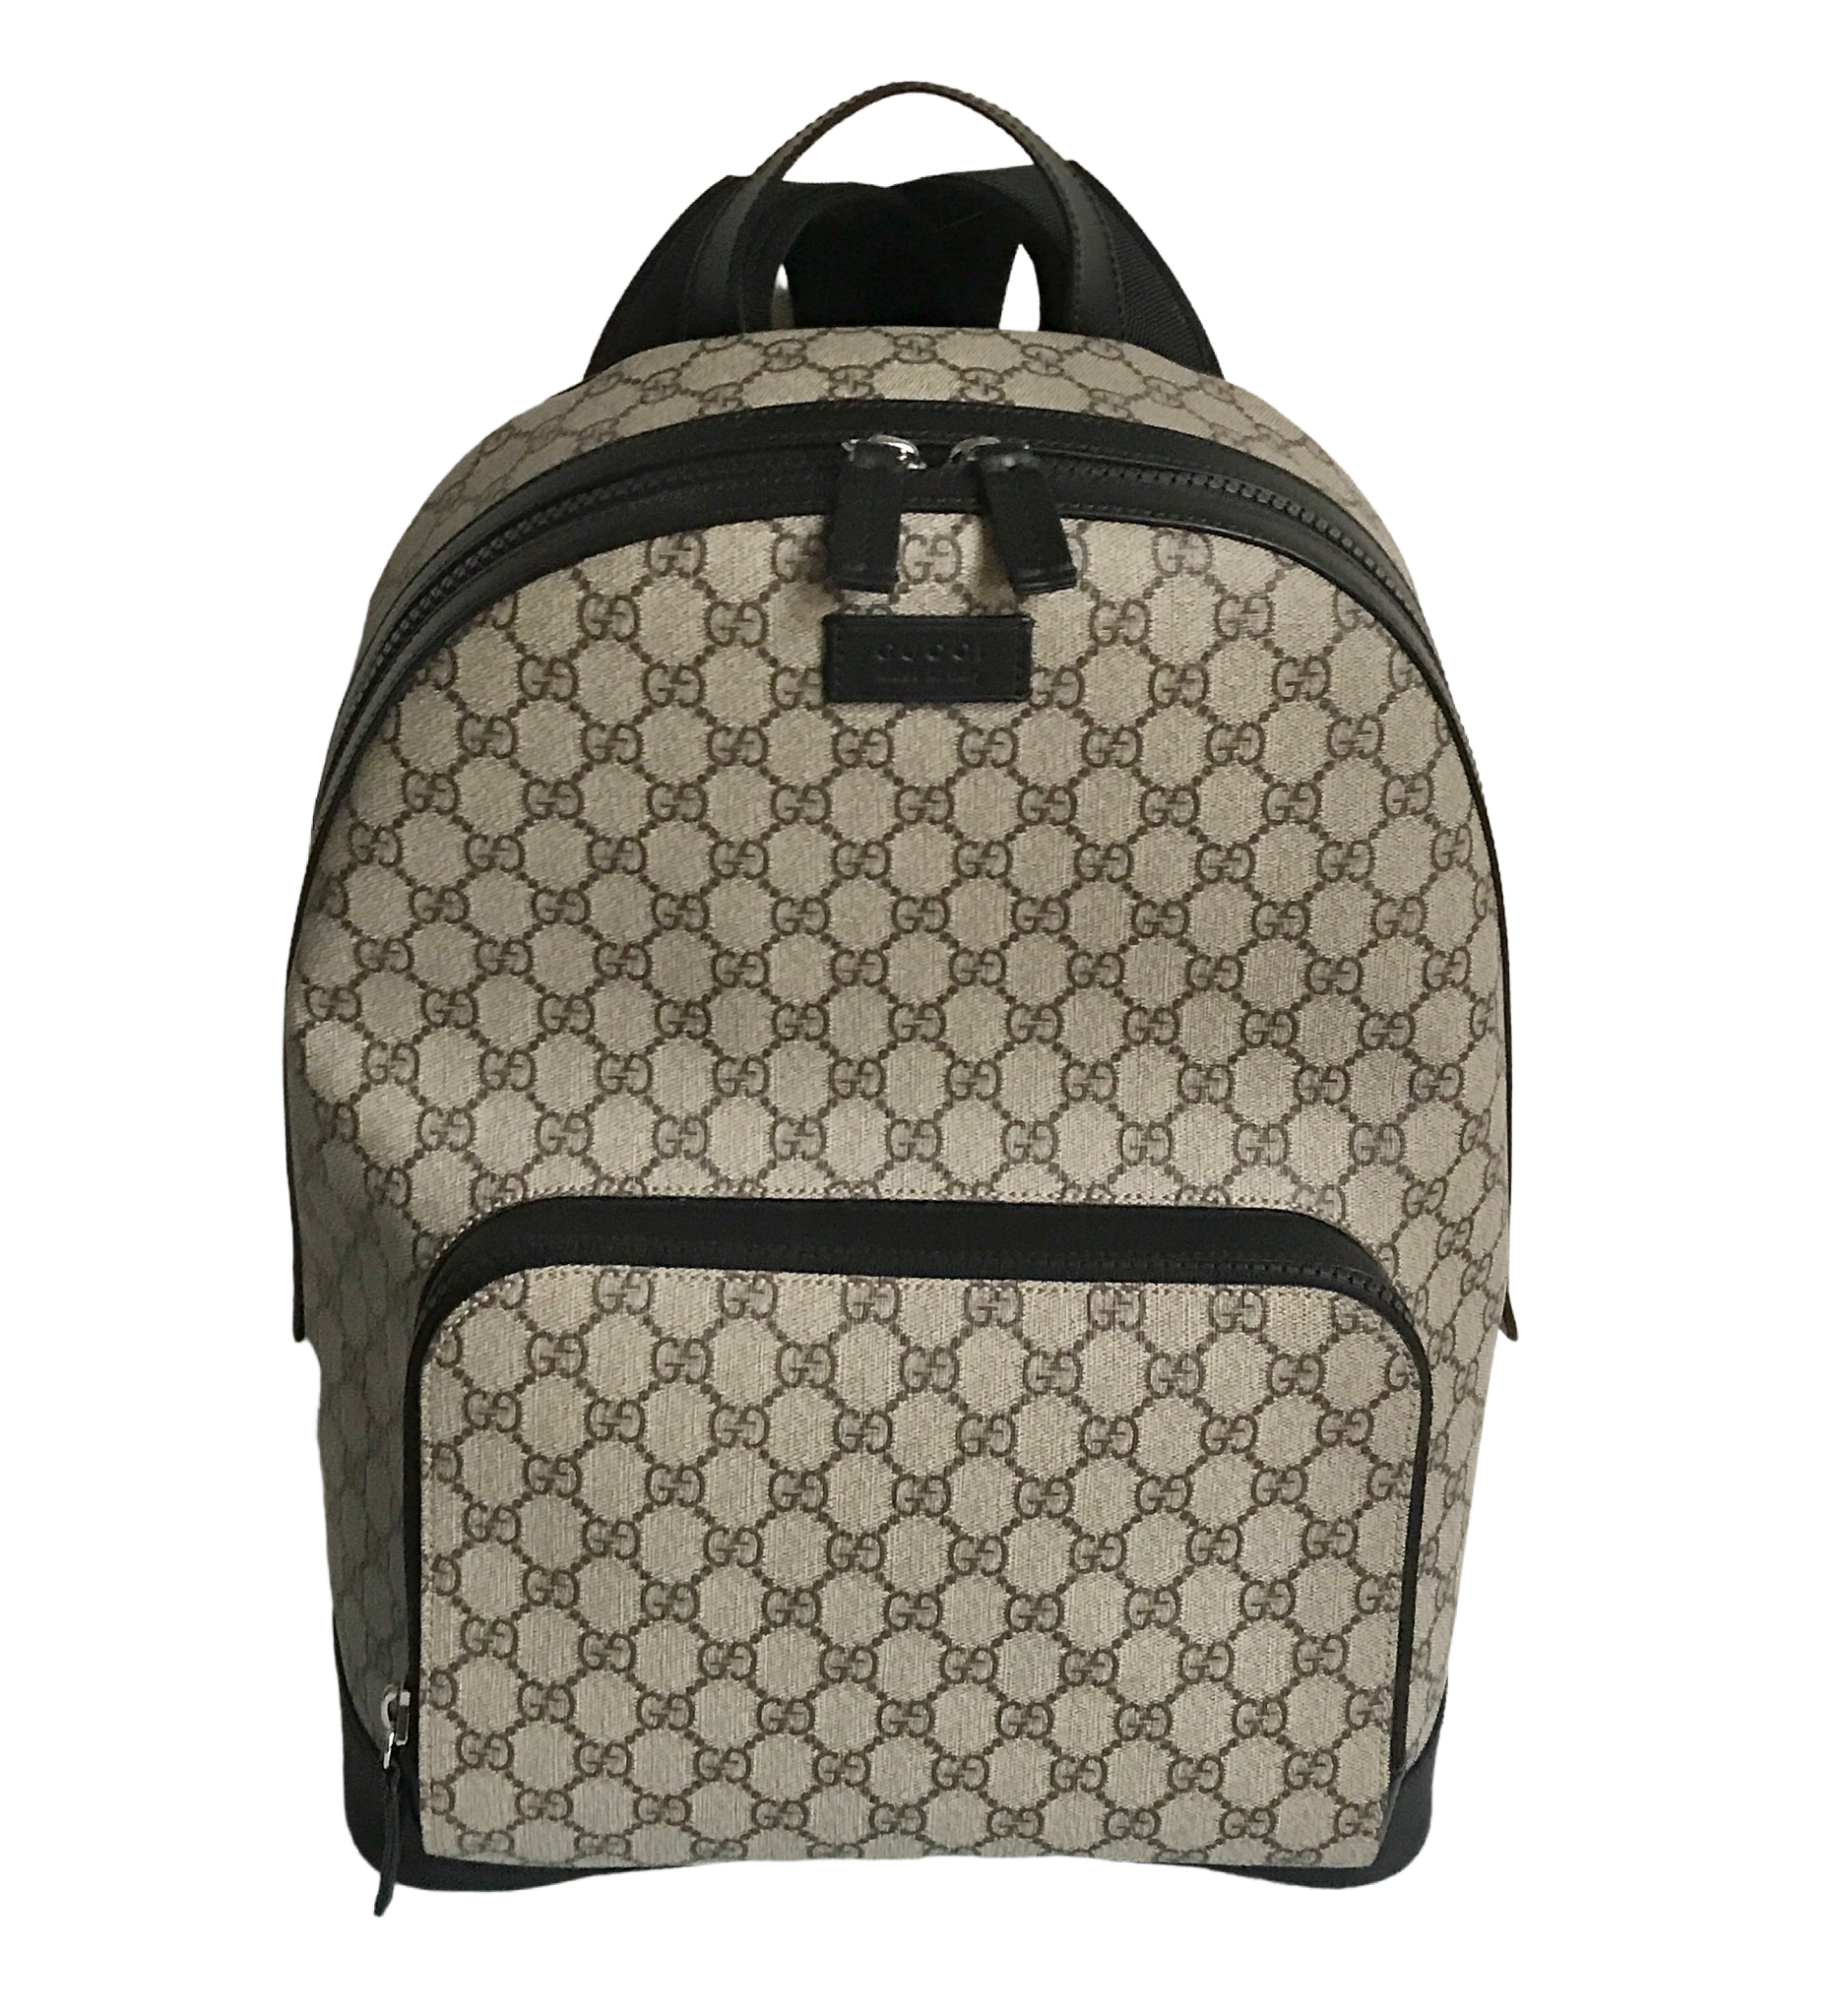 GG Supreme Backpack in Black - Gucci